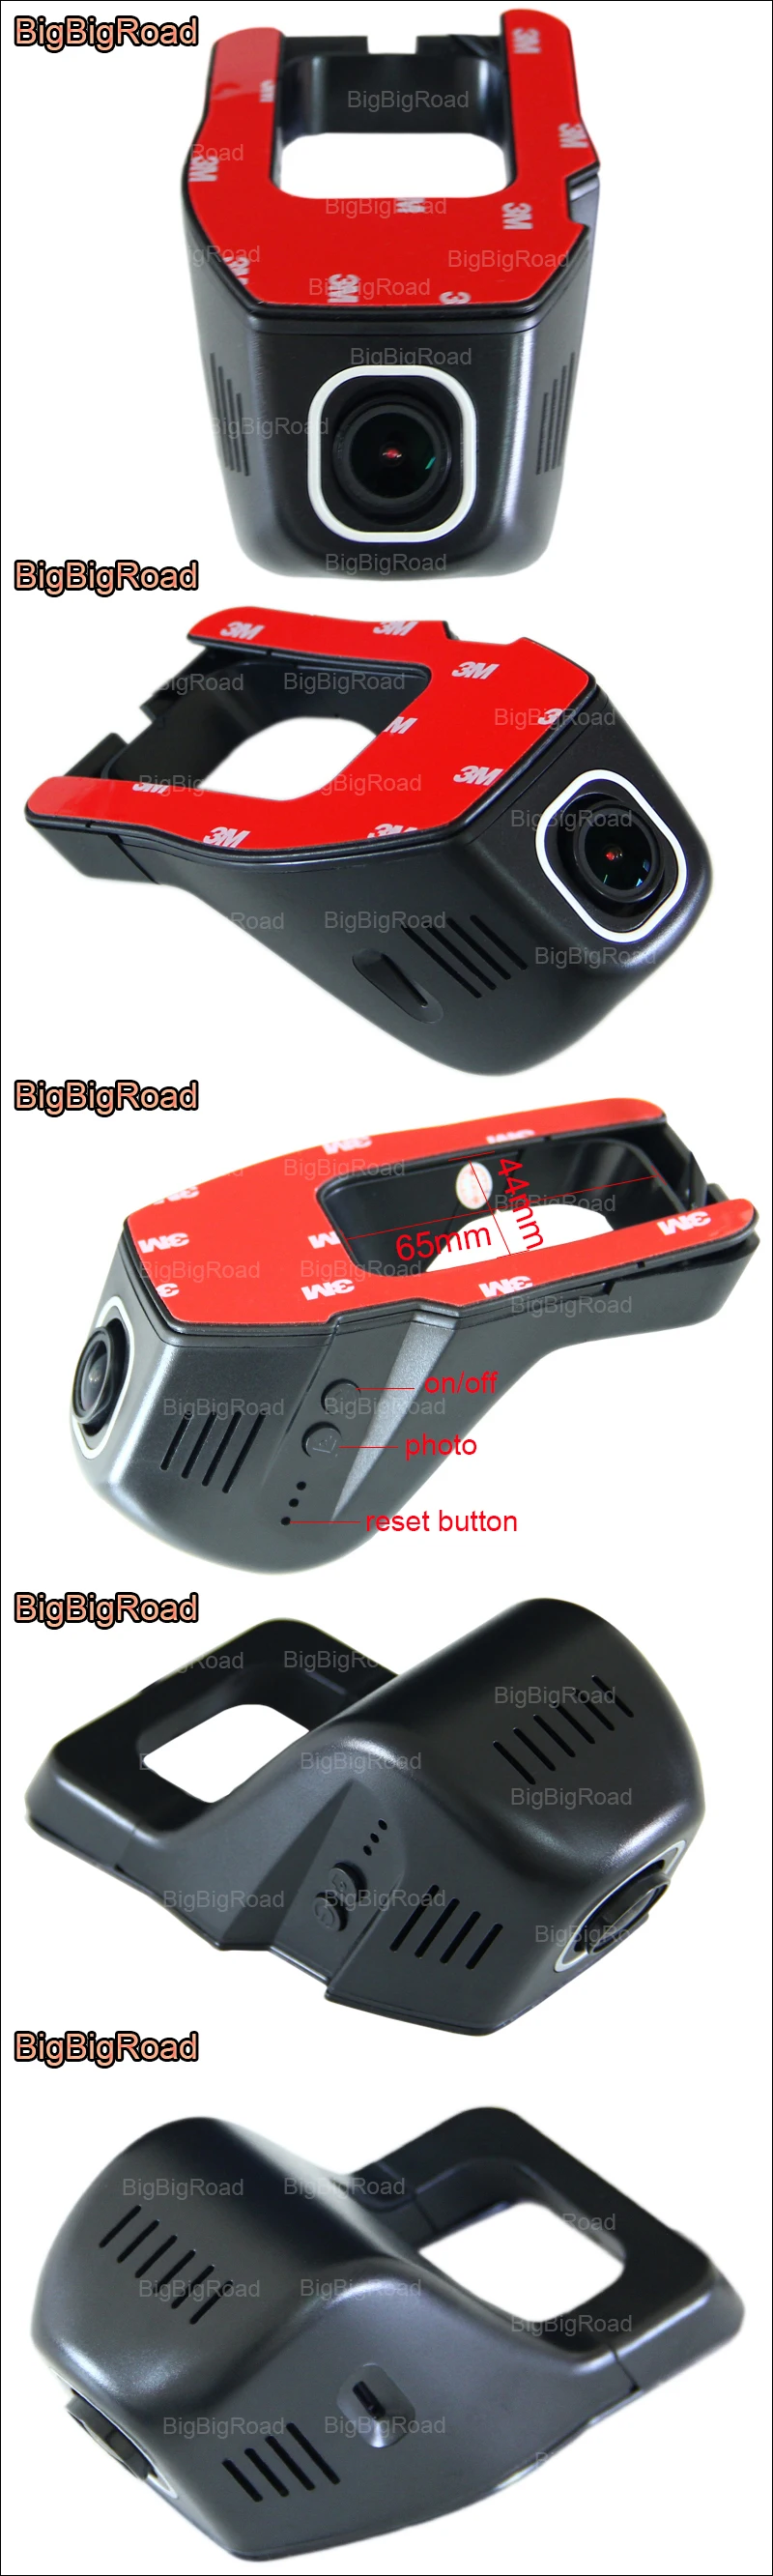 BigBigRoad For Dodge Avenger Durango Ram Car wifi DVR Video Recorder Dash Cam night vision black box Dash cam (9)